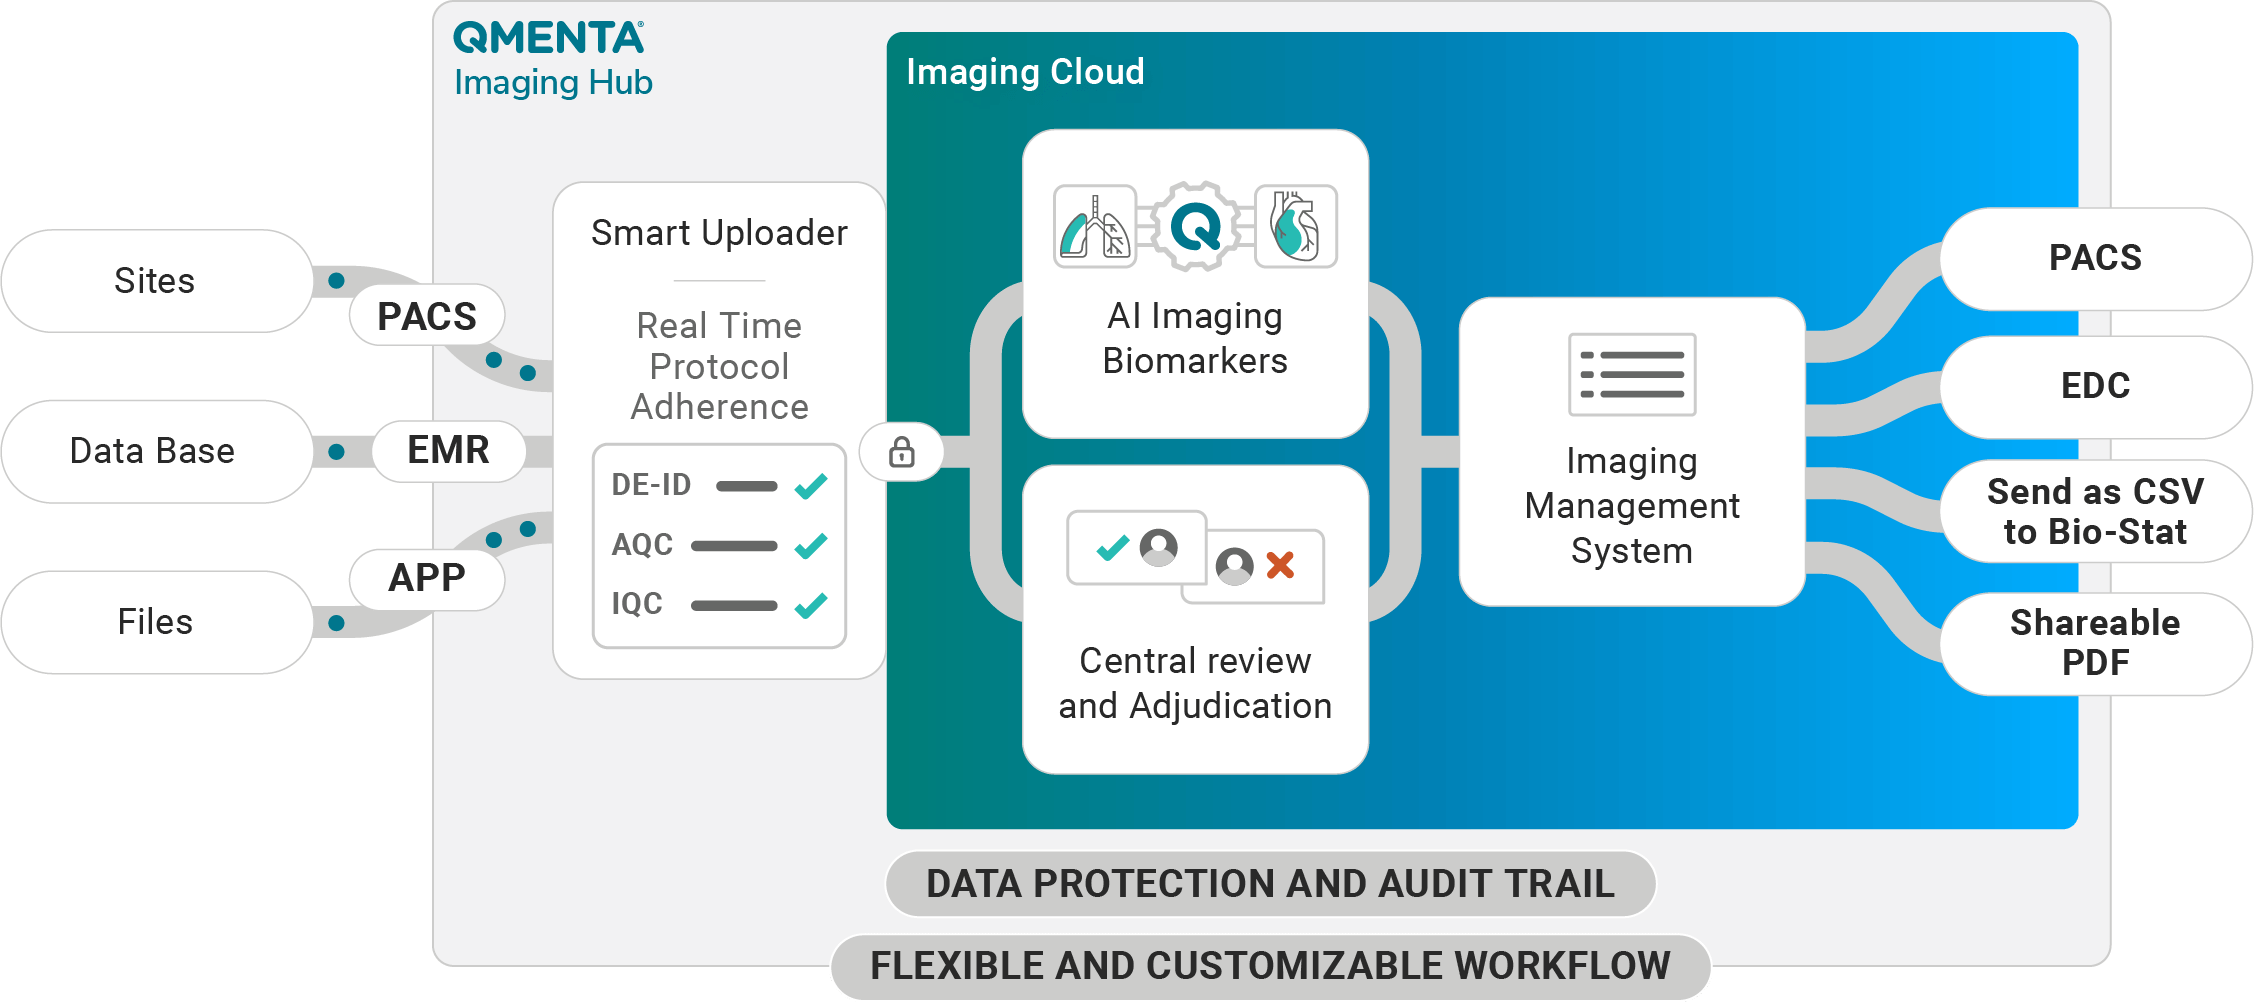 QMENTA-Imaging-Hub-Process-Cloud